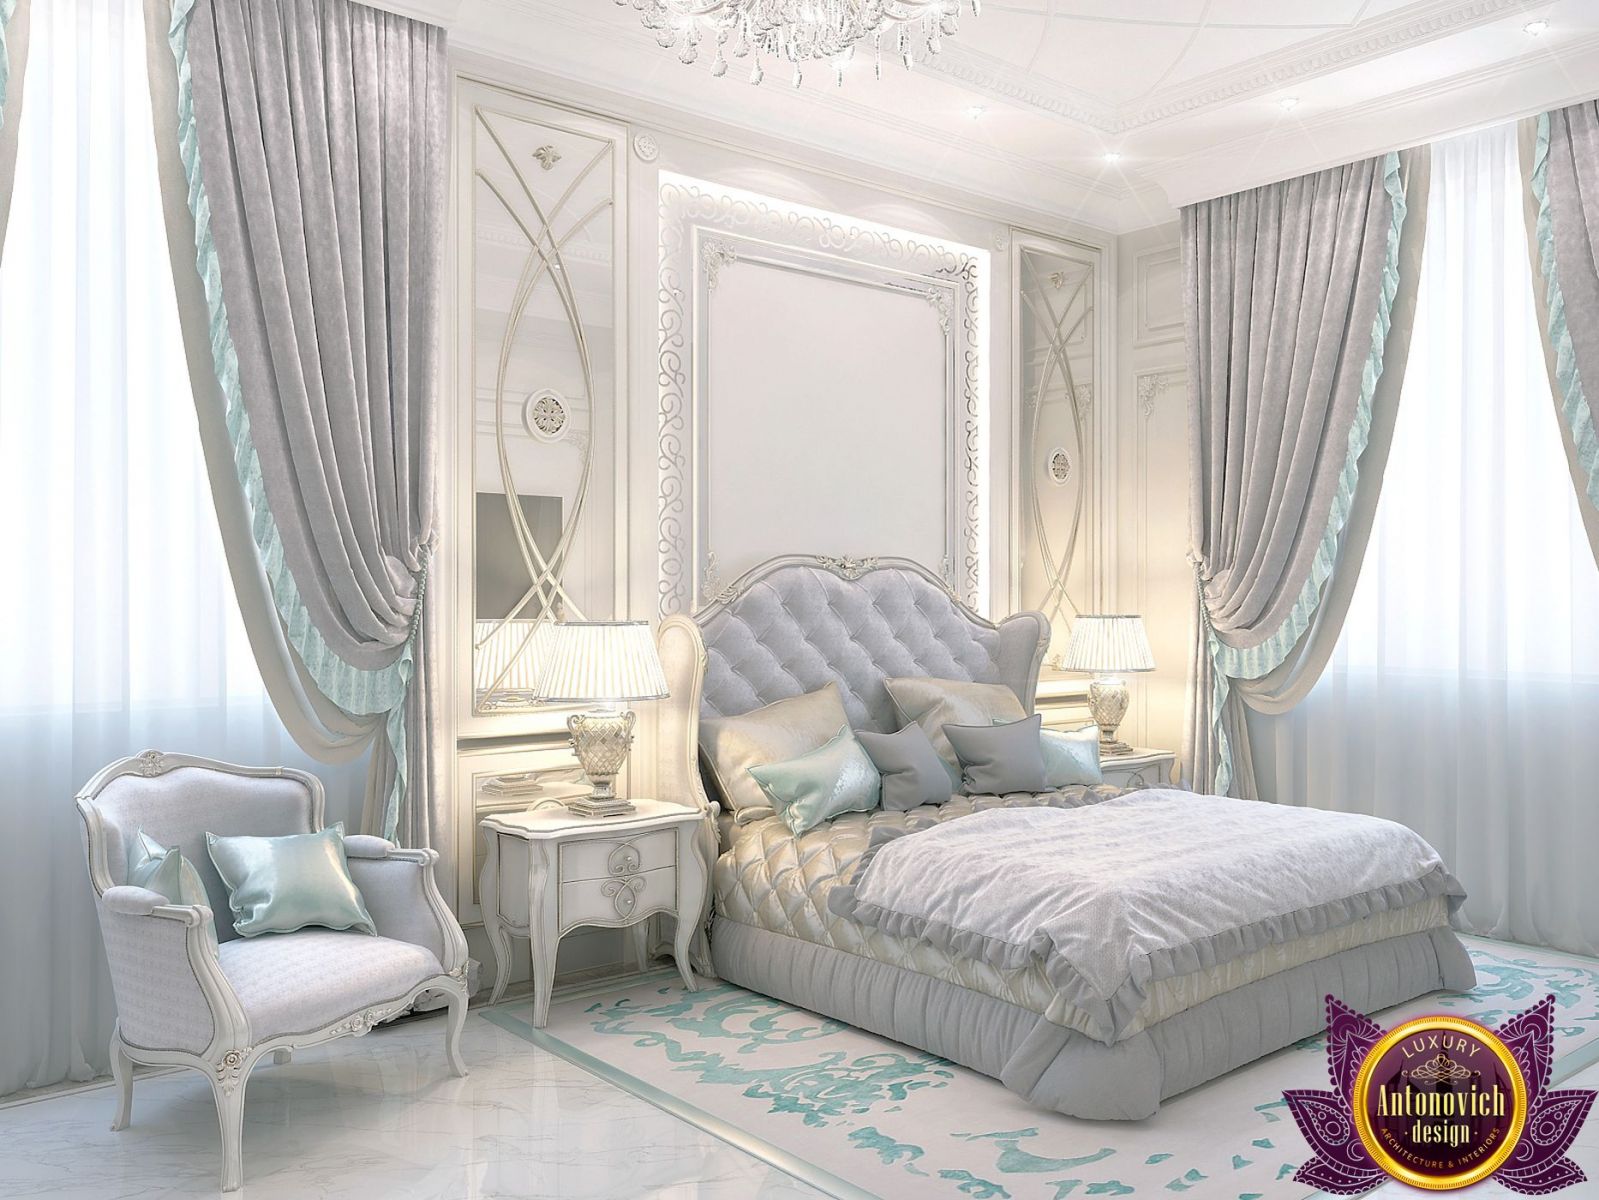 Exquisite chandelier illuminating a luxurious bedroom